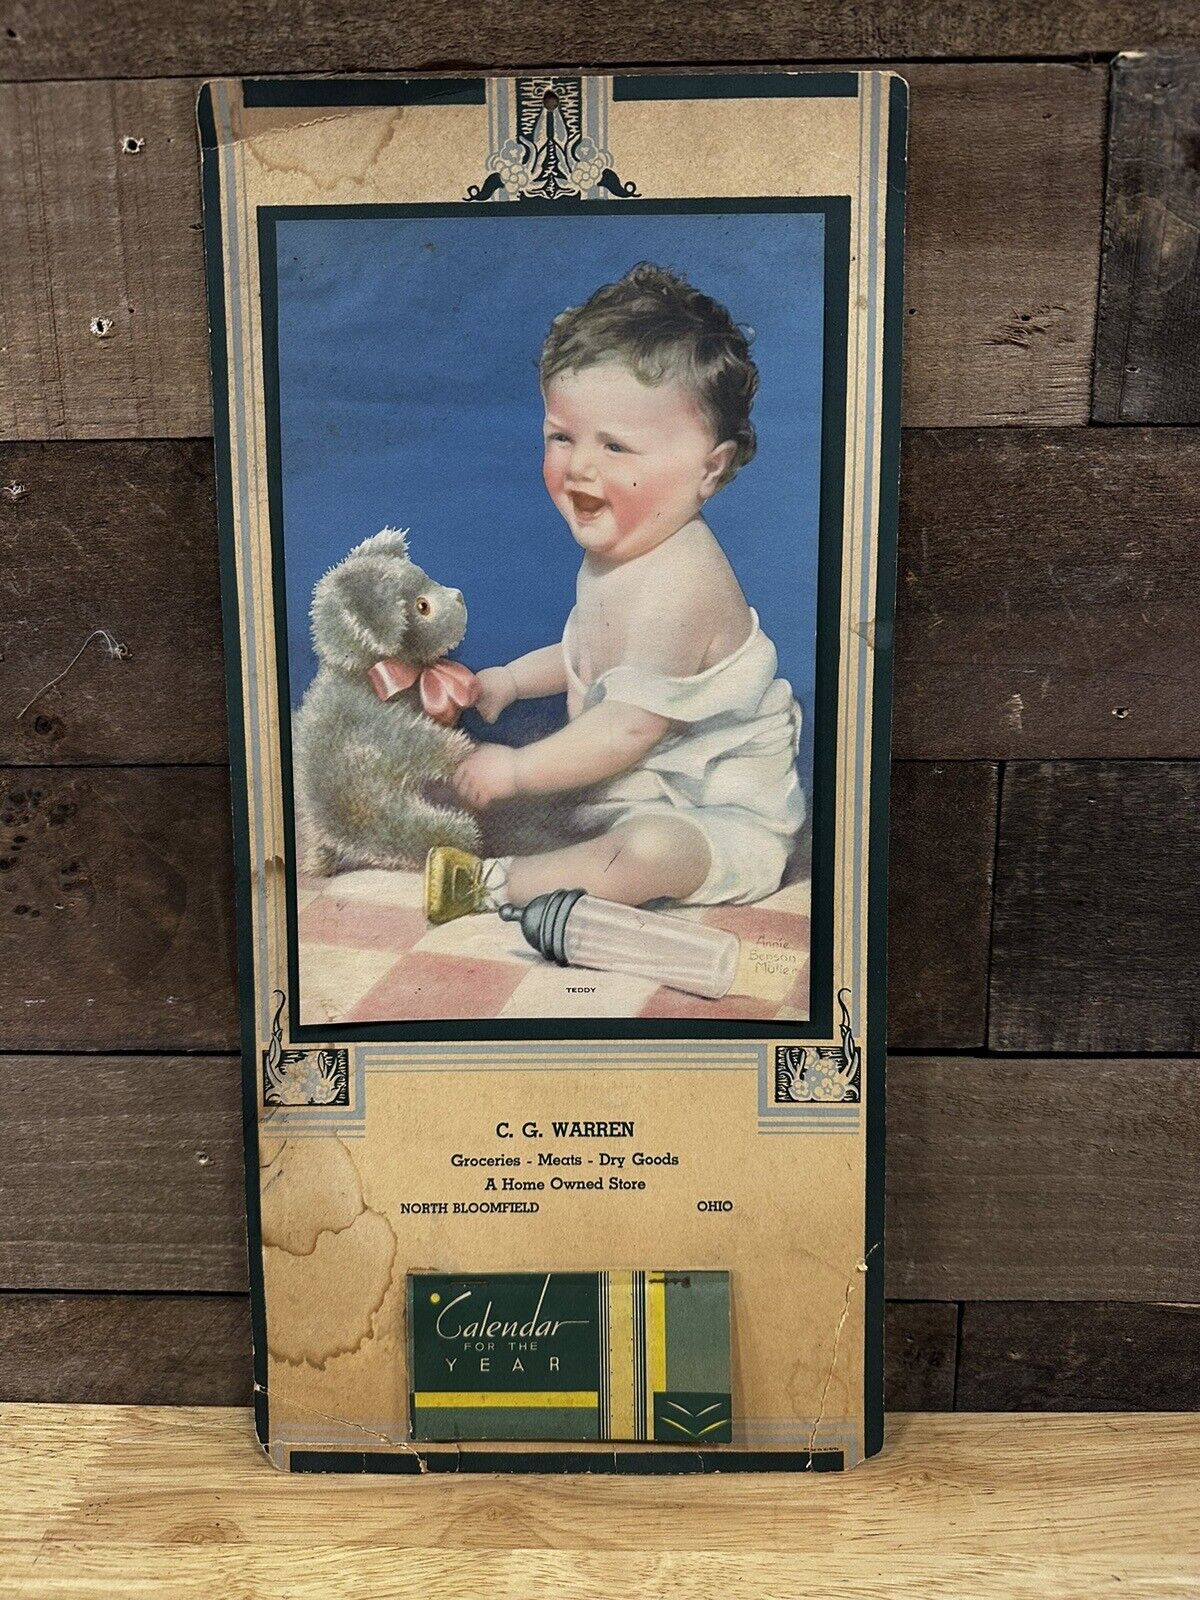 Vintage 1936 C. G. Warren Calendar “Teddy” North Bloomfield Ohio